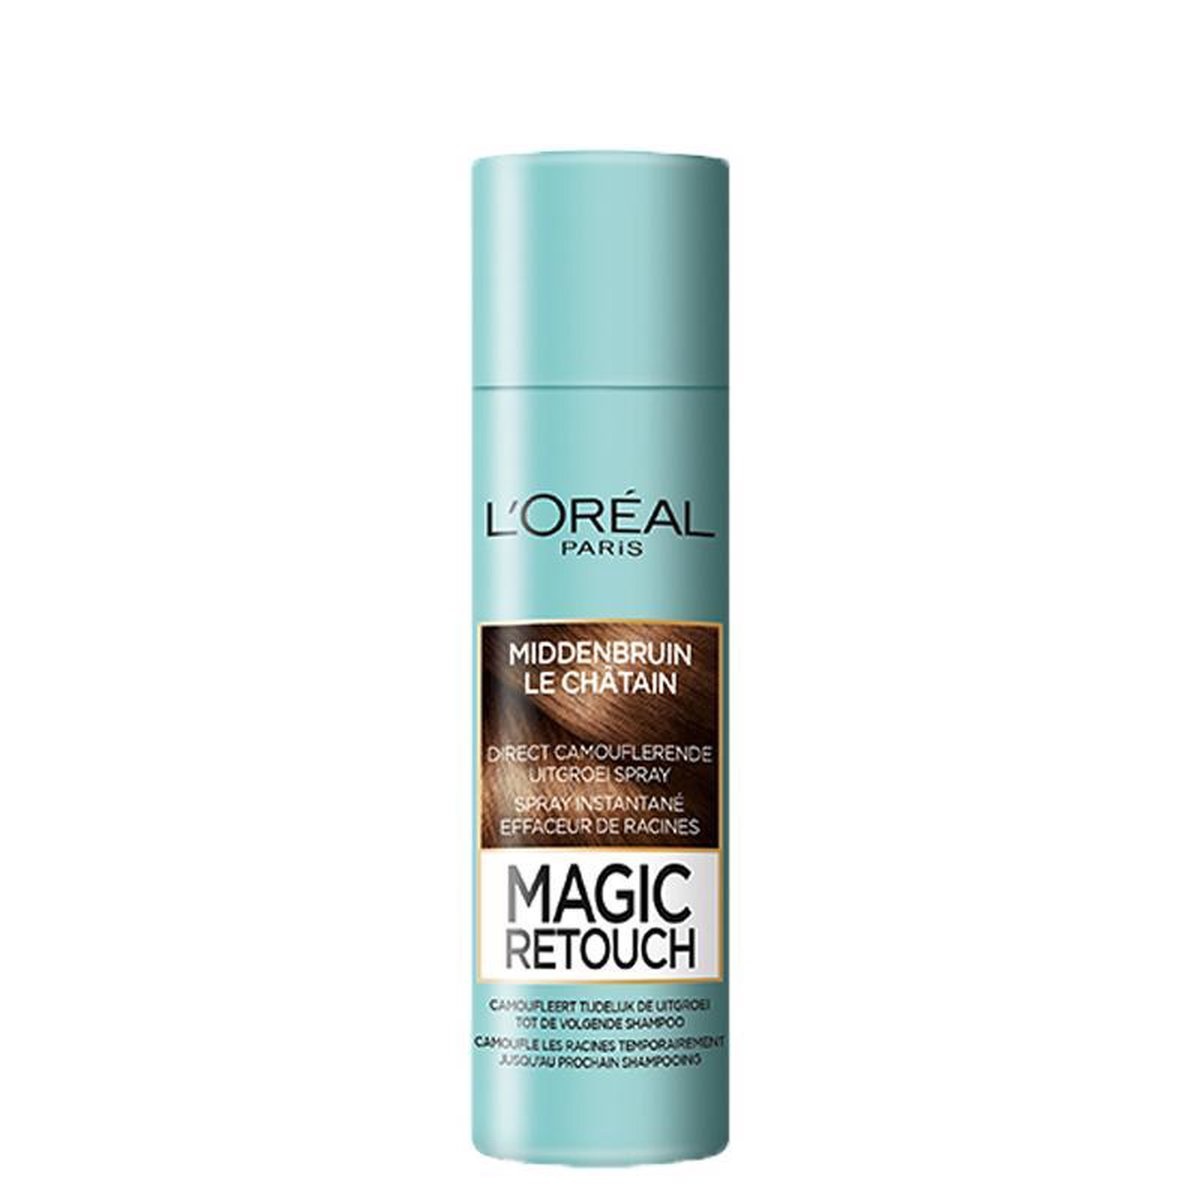 L'Oréal Paris Magic Retouch - Outgrowth Camouflage Spray 150ml value pack - 3 Medium Brown